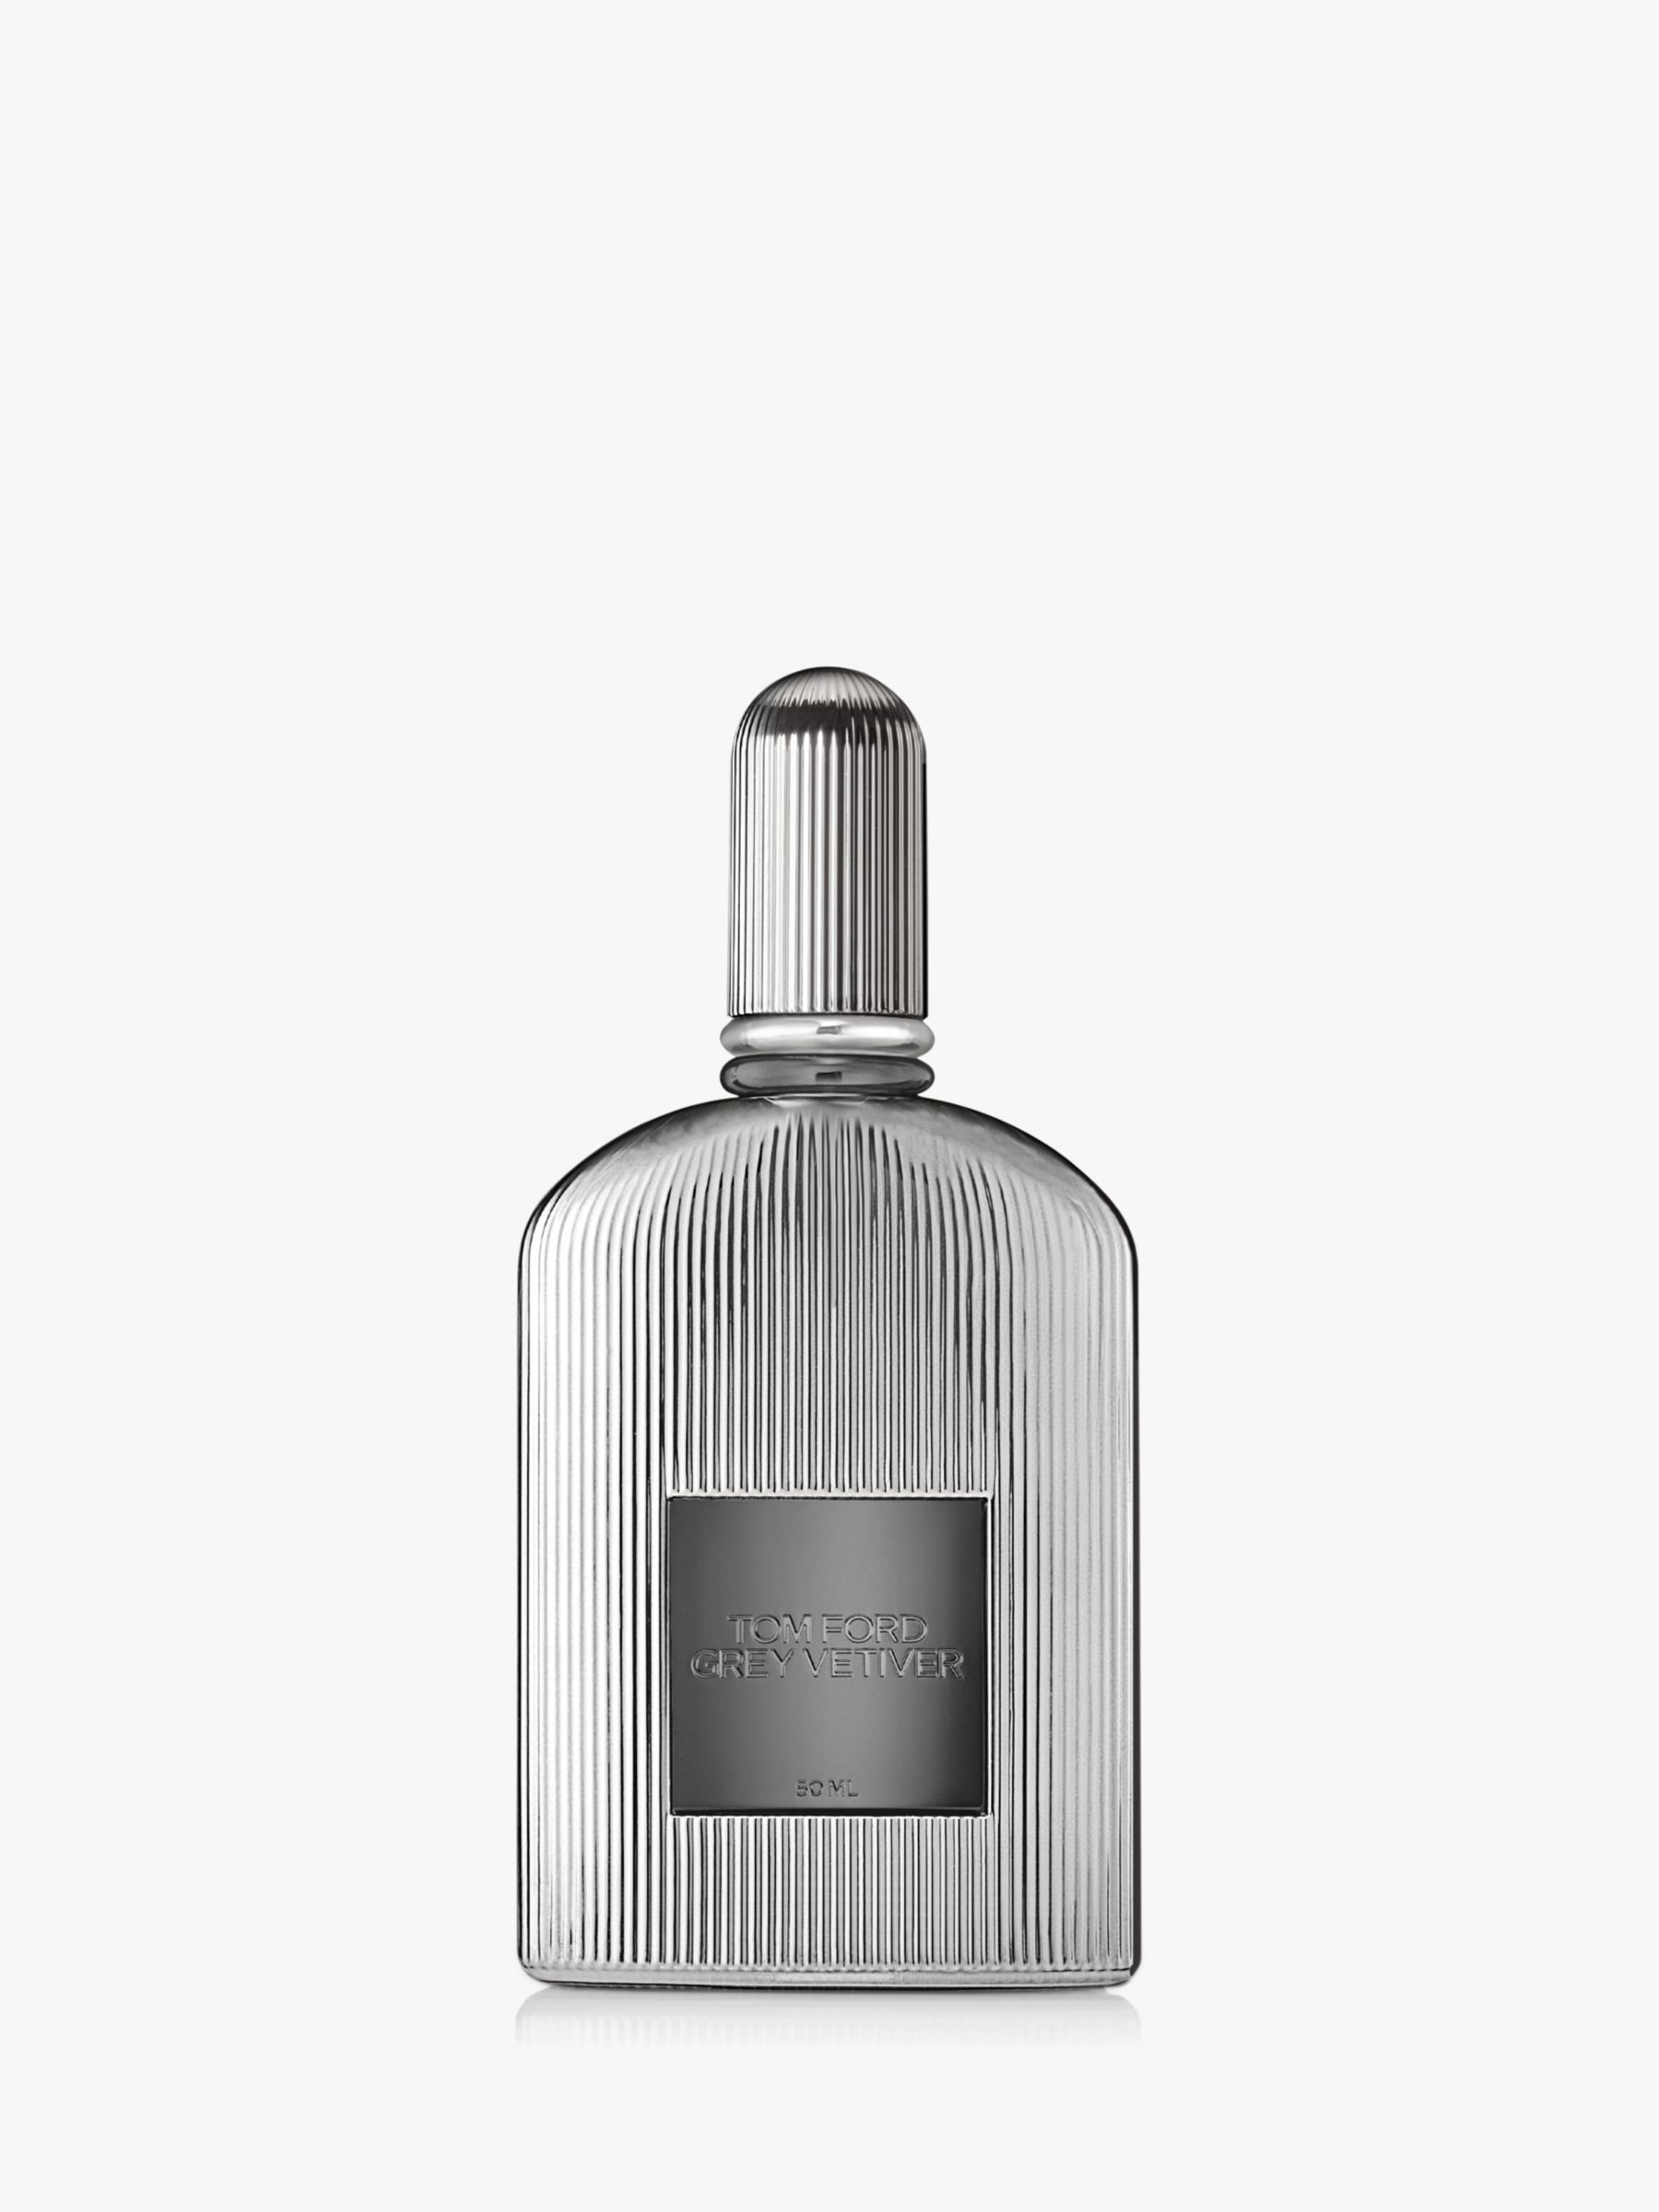 TOM FORD Grey Vetiver Parfum, 50ml 1